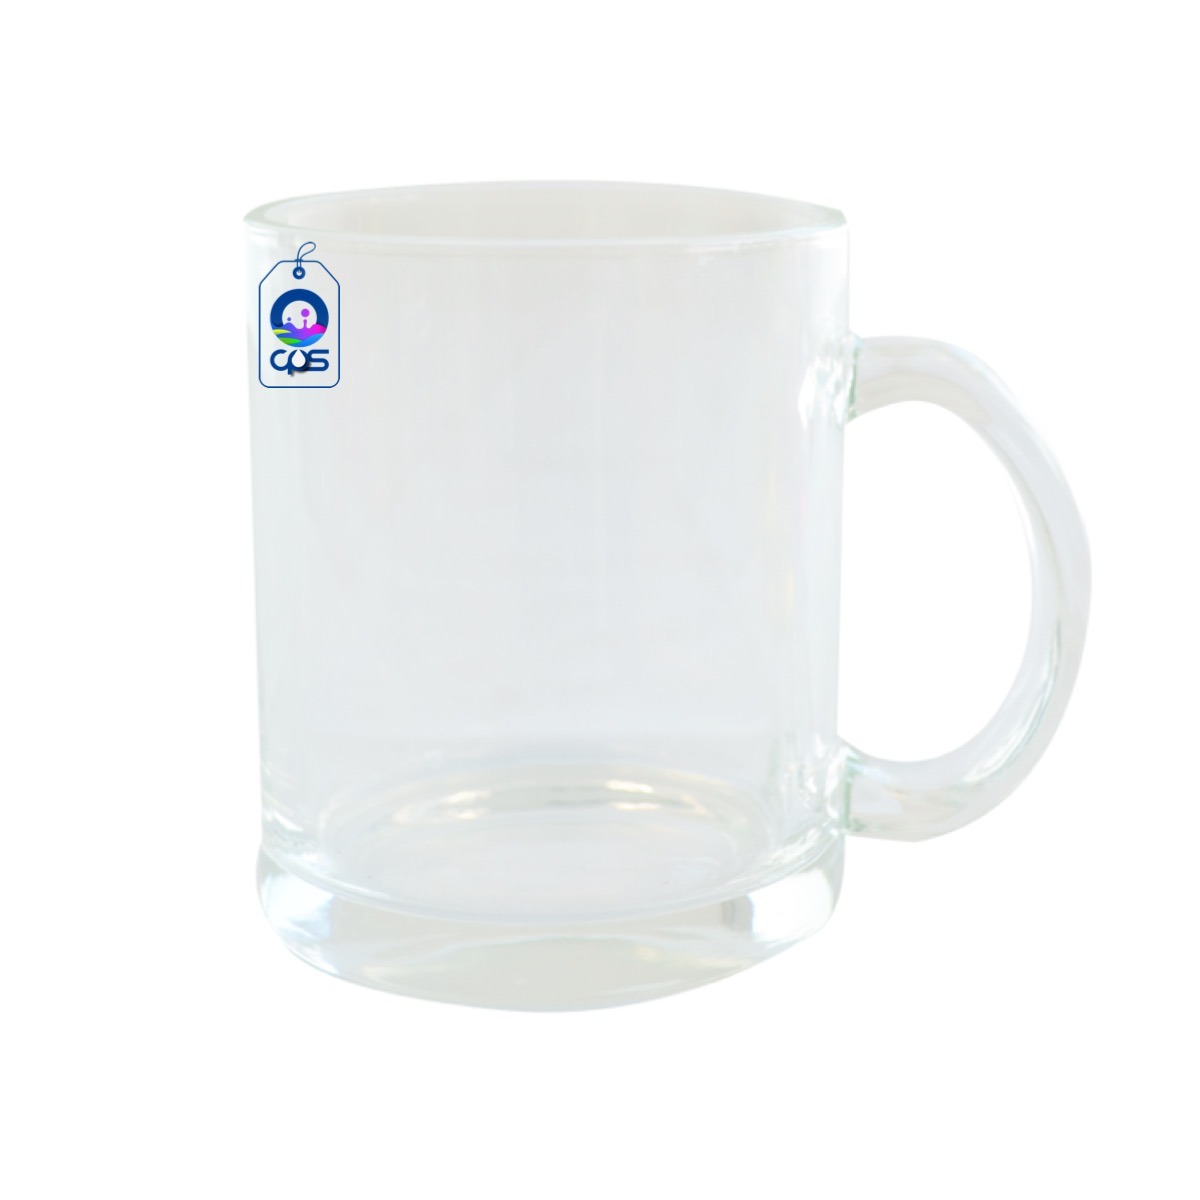 Tazas de café de vidrio transparente – Tazas resistentes al calor de 8  onzas para té, café, expreso,…Ver más Tazas de café de vidrio transparente  –